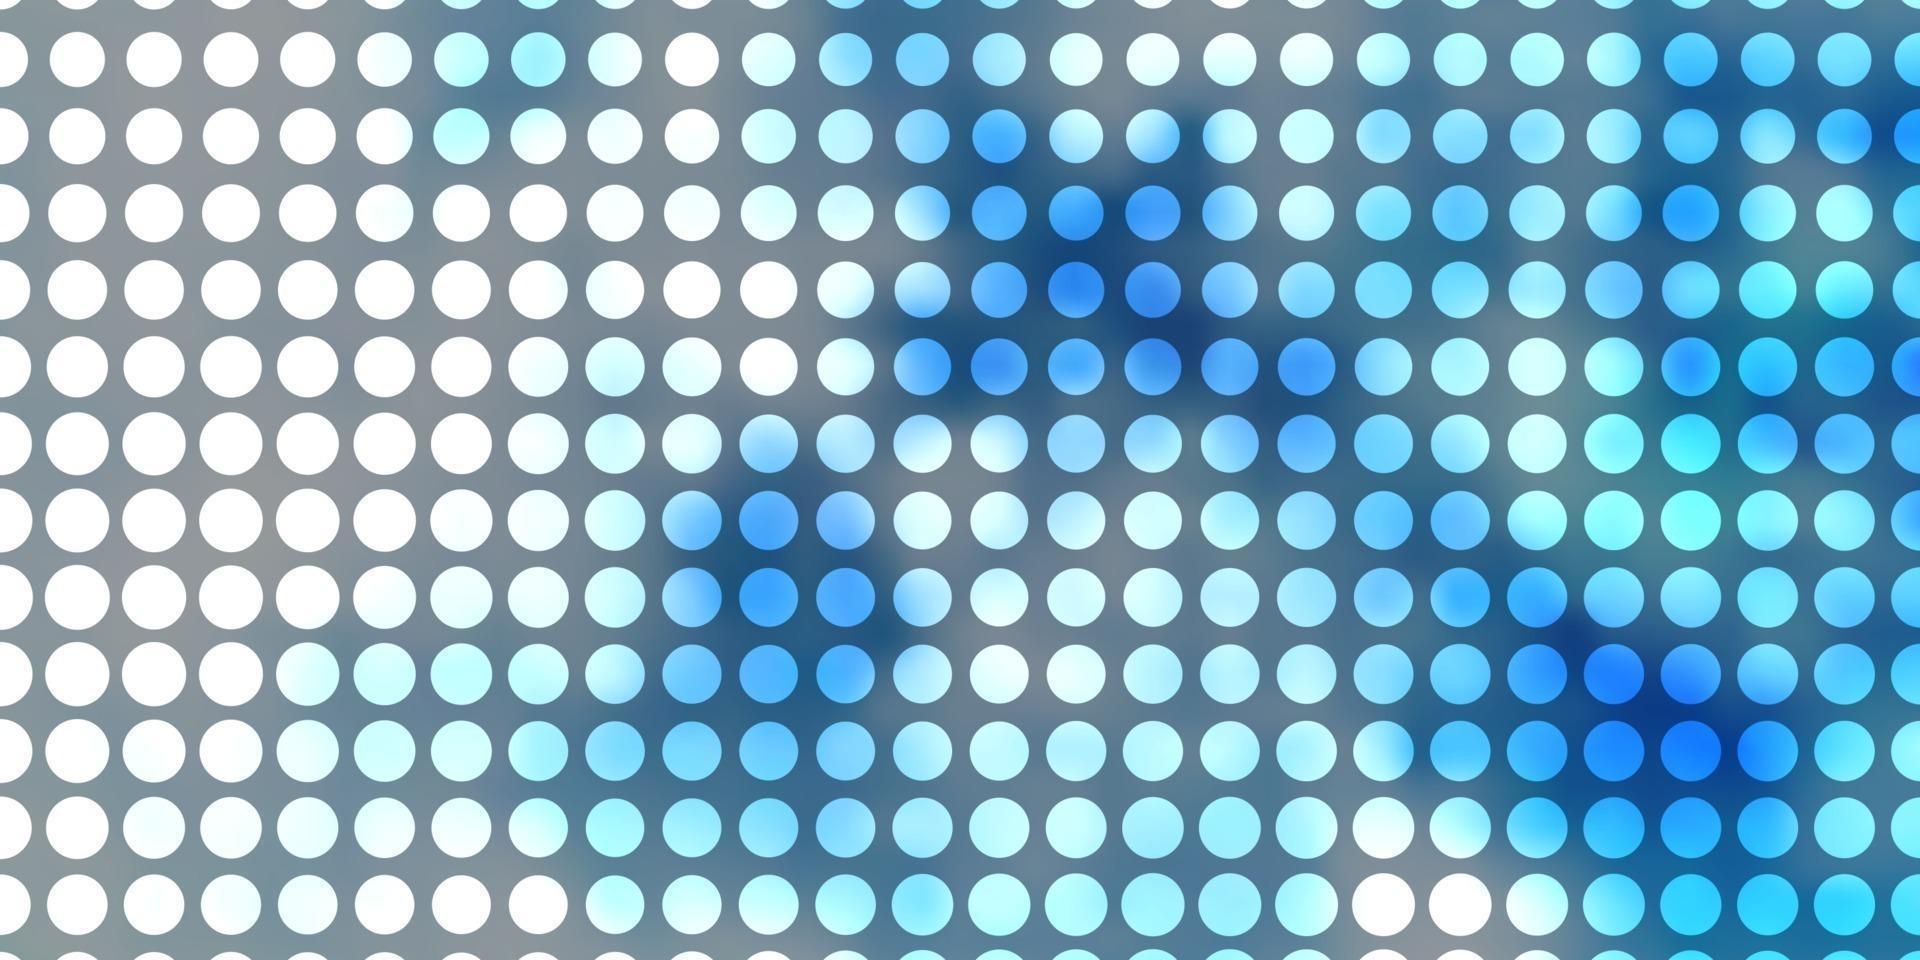 Telón de fondo de vector azul claro con círculos.